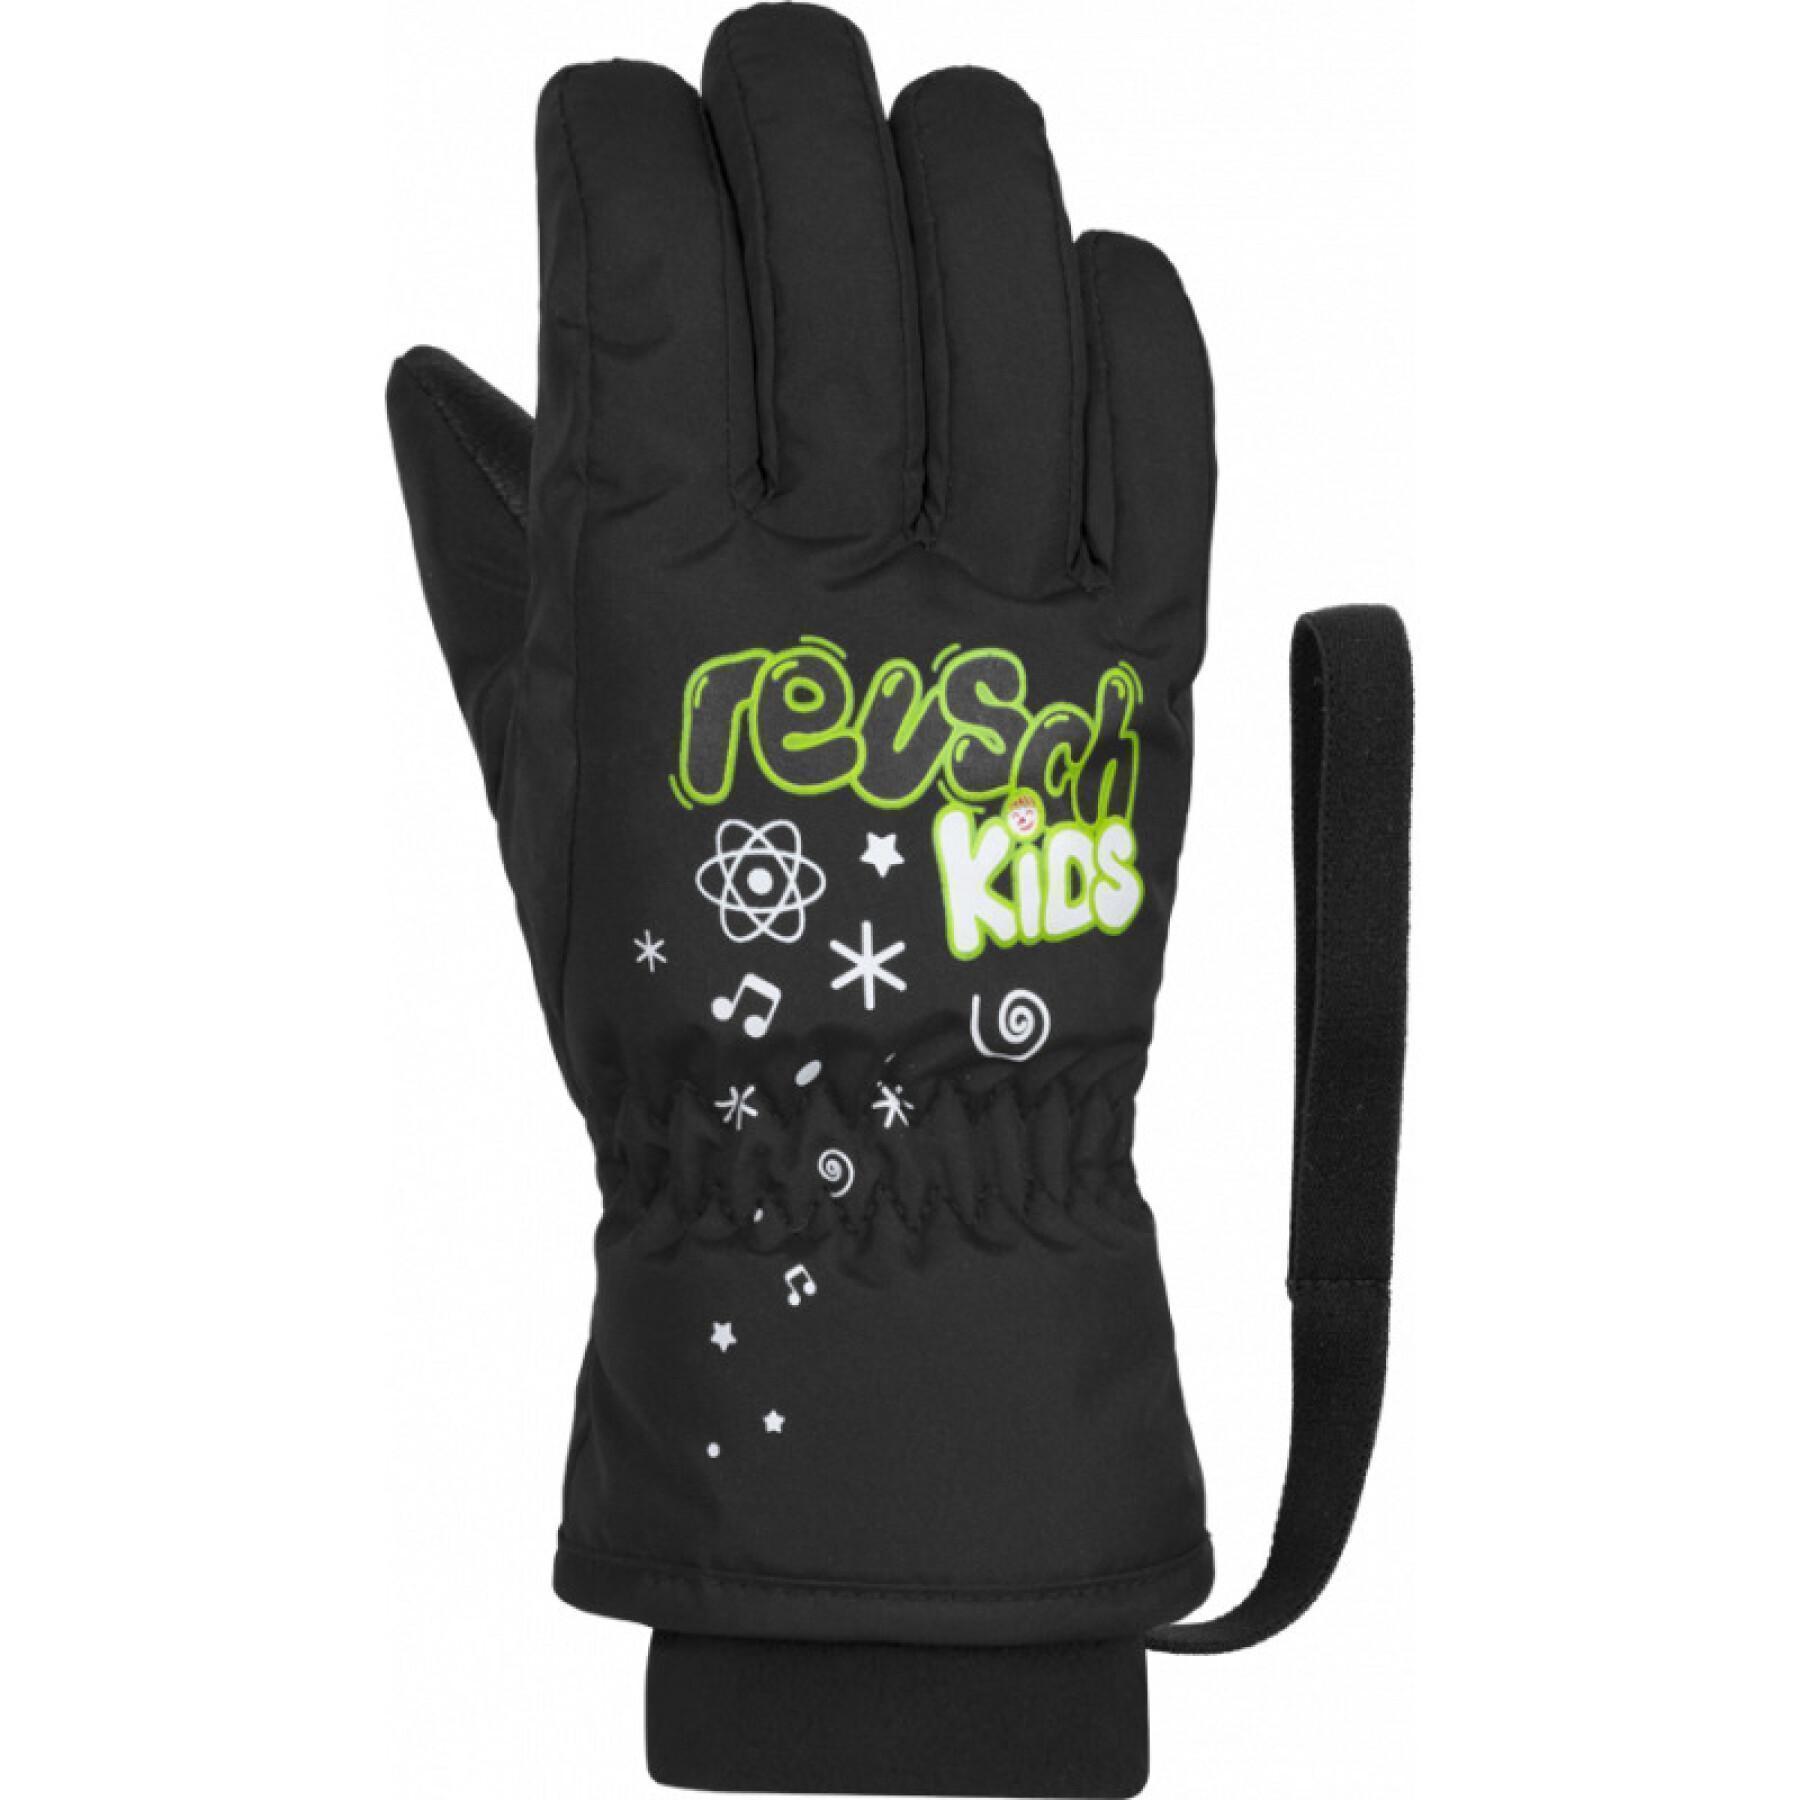 Kid gloves Reusch